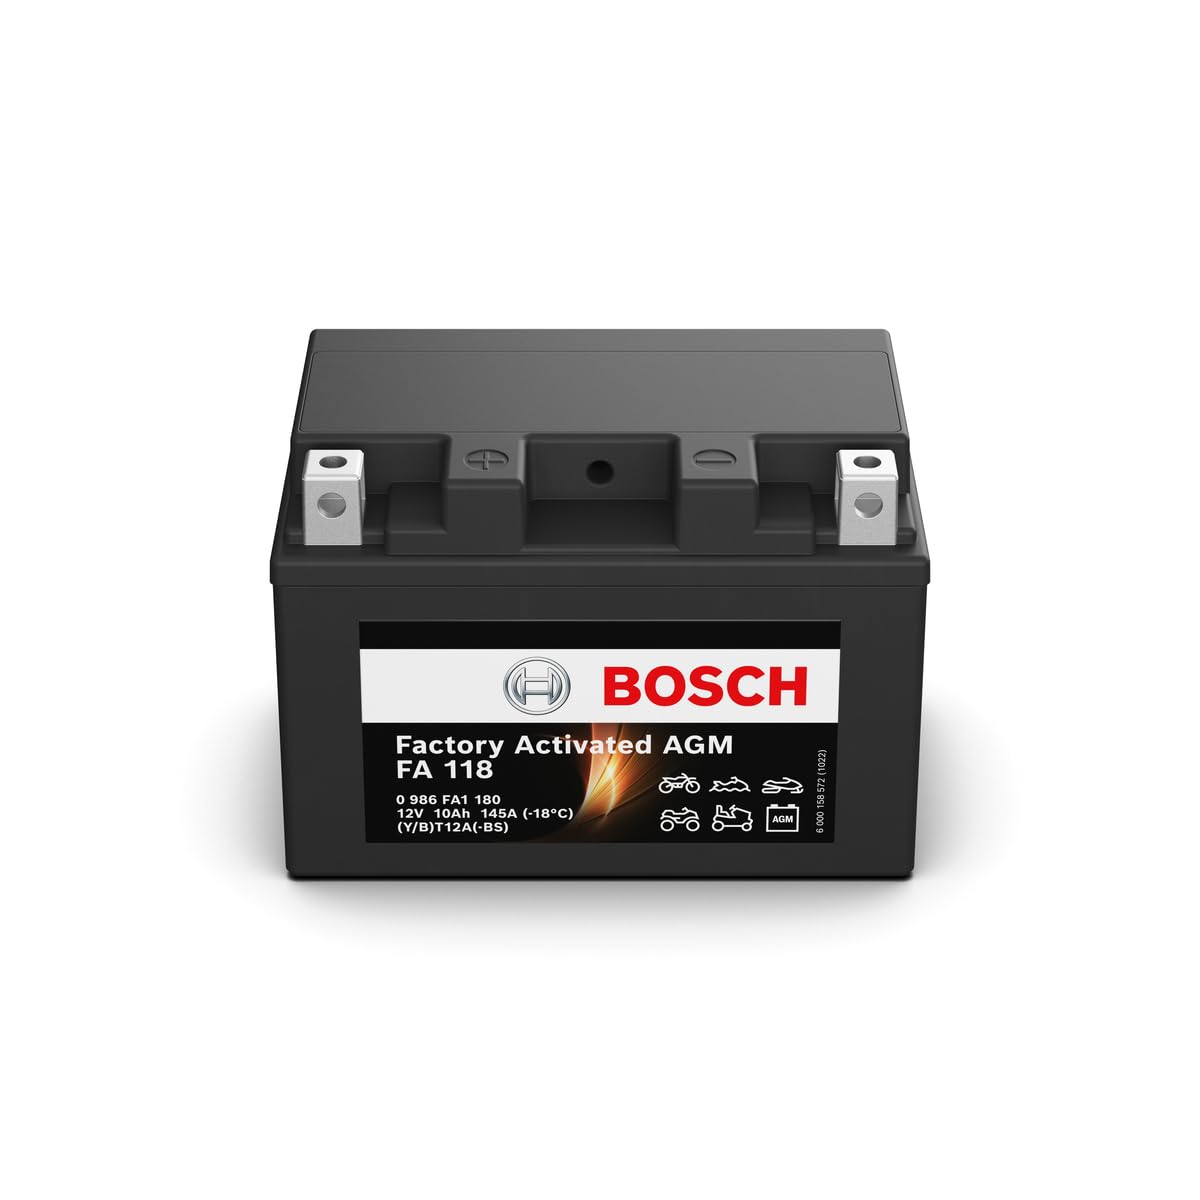 Bosch FA118 - AGM-Motorradbatterie - 12V 145A 10Ah - Geeignet für Motorräder, Motorräder, Enduros, Roller, Quads, Jetskis - Kompatibel M6016, BT12A-BS, BT12A von Bosch Automotive